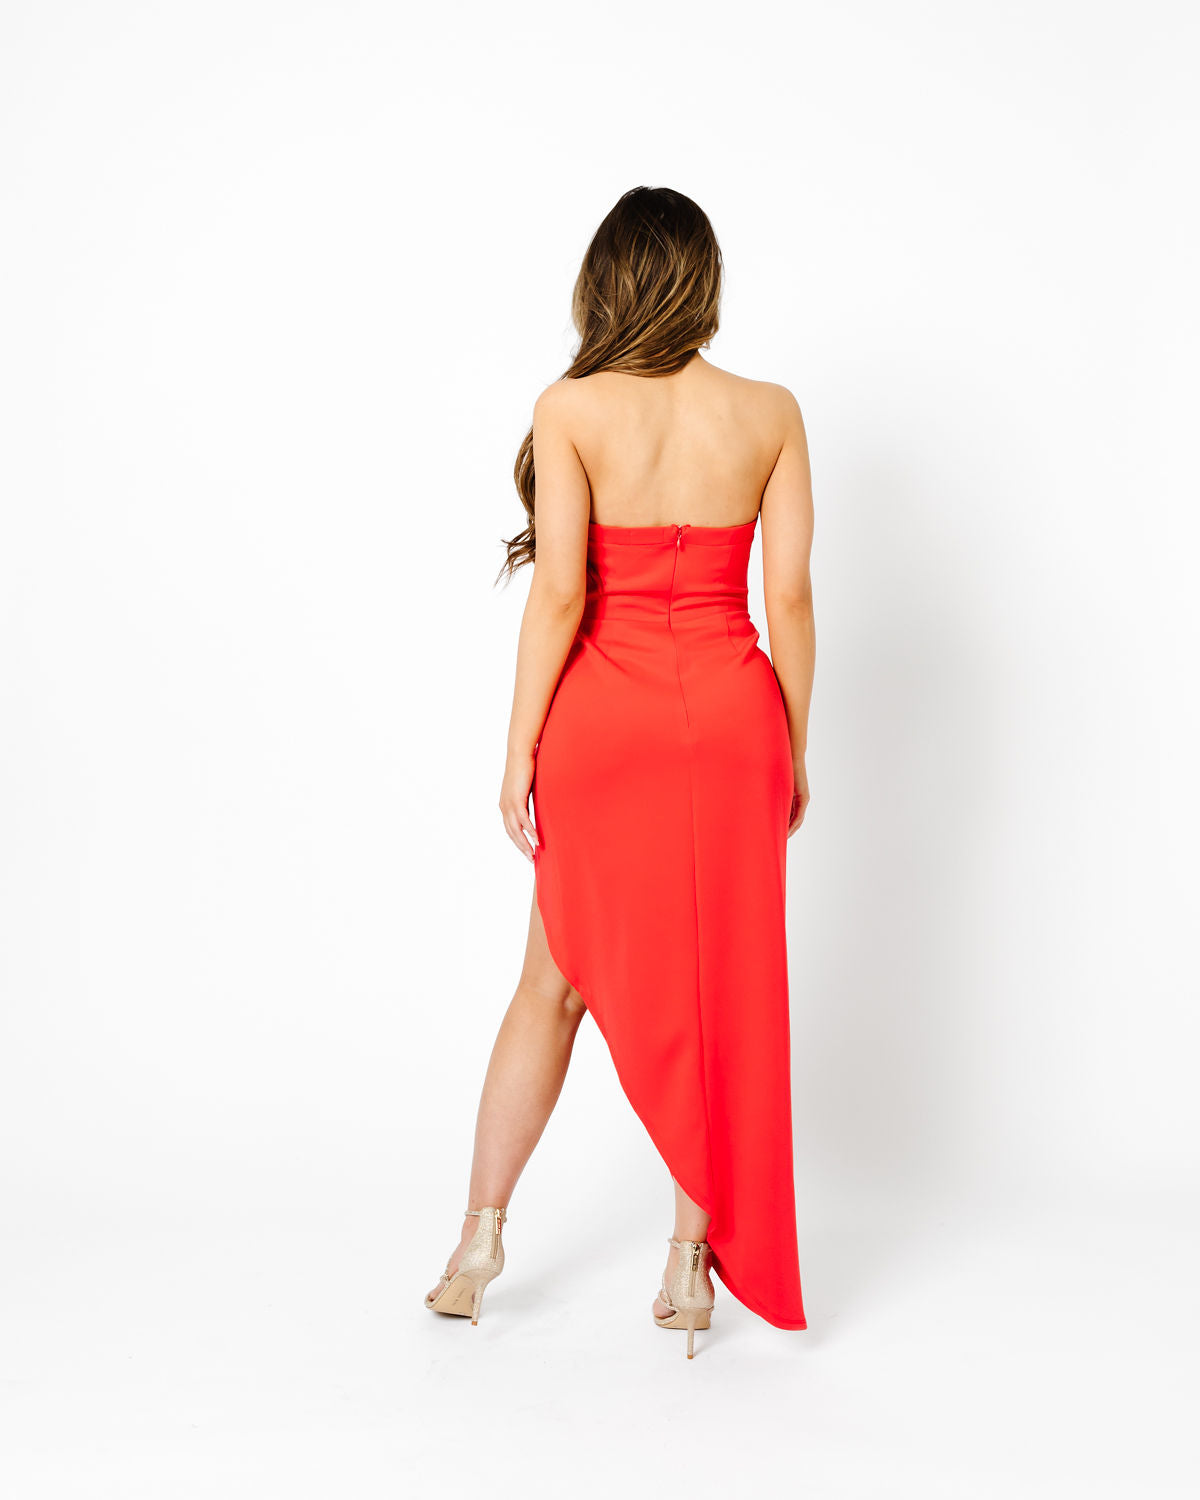 Red Corset Dress